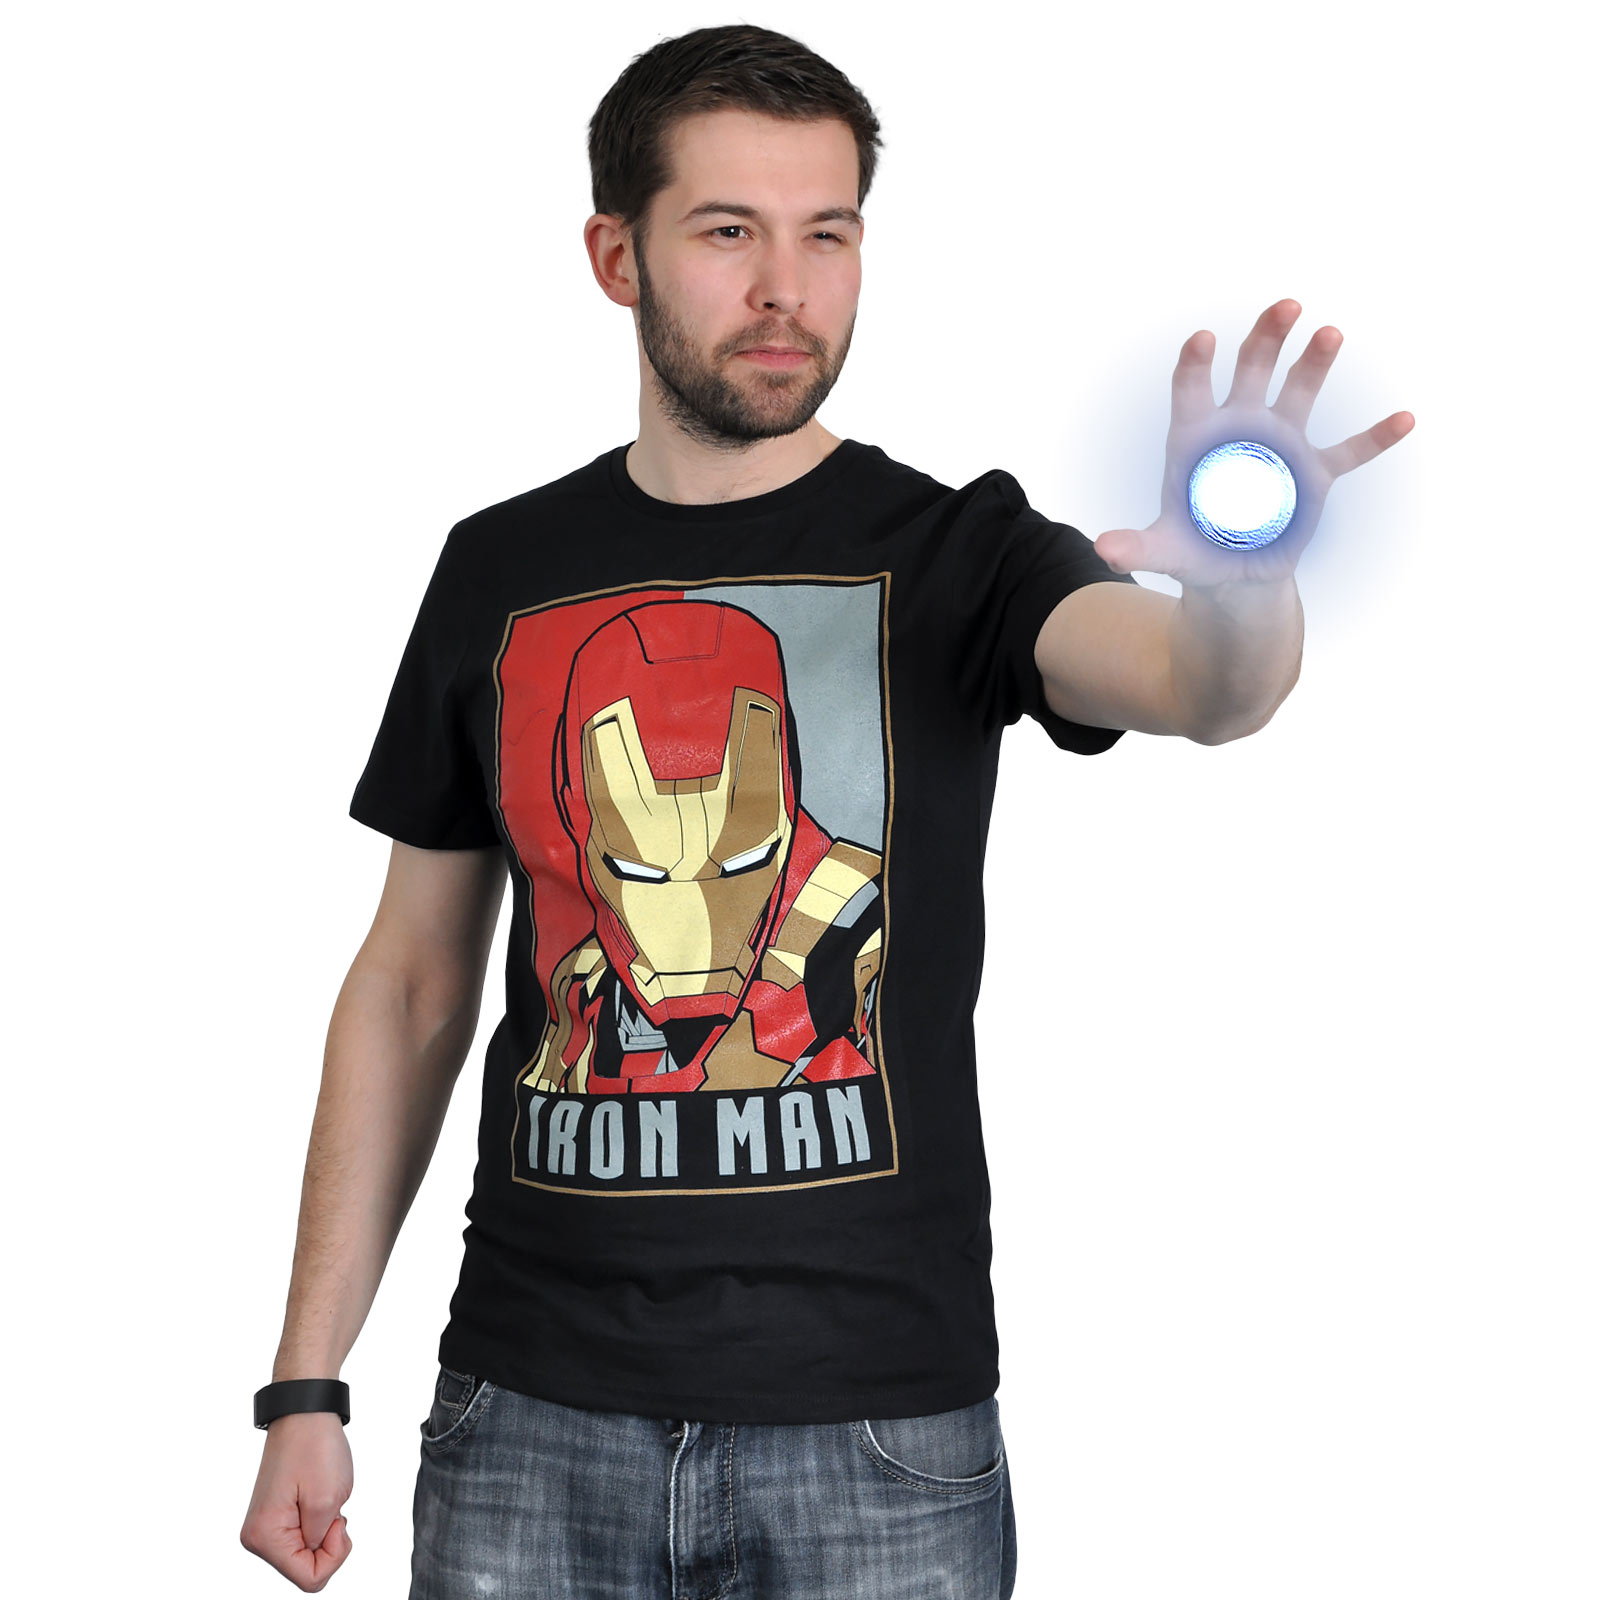 Iron Man - Poster T-Shirt black